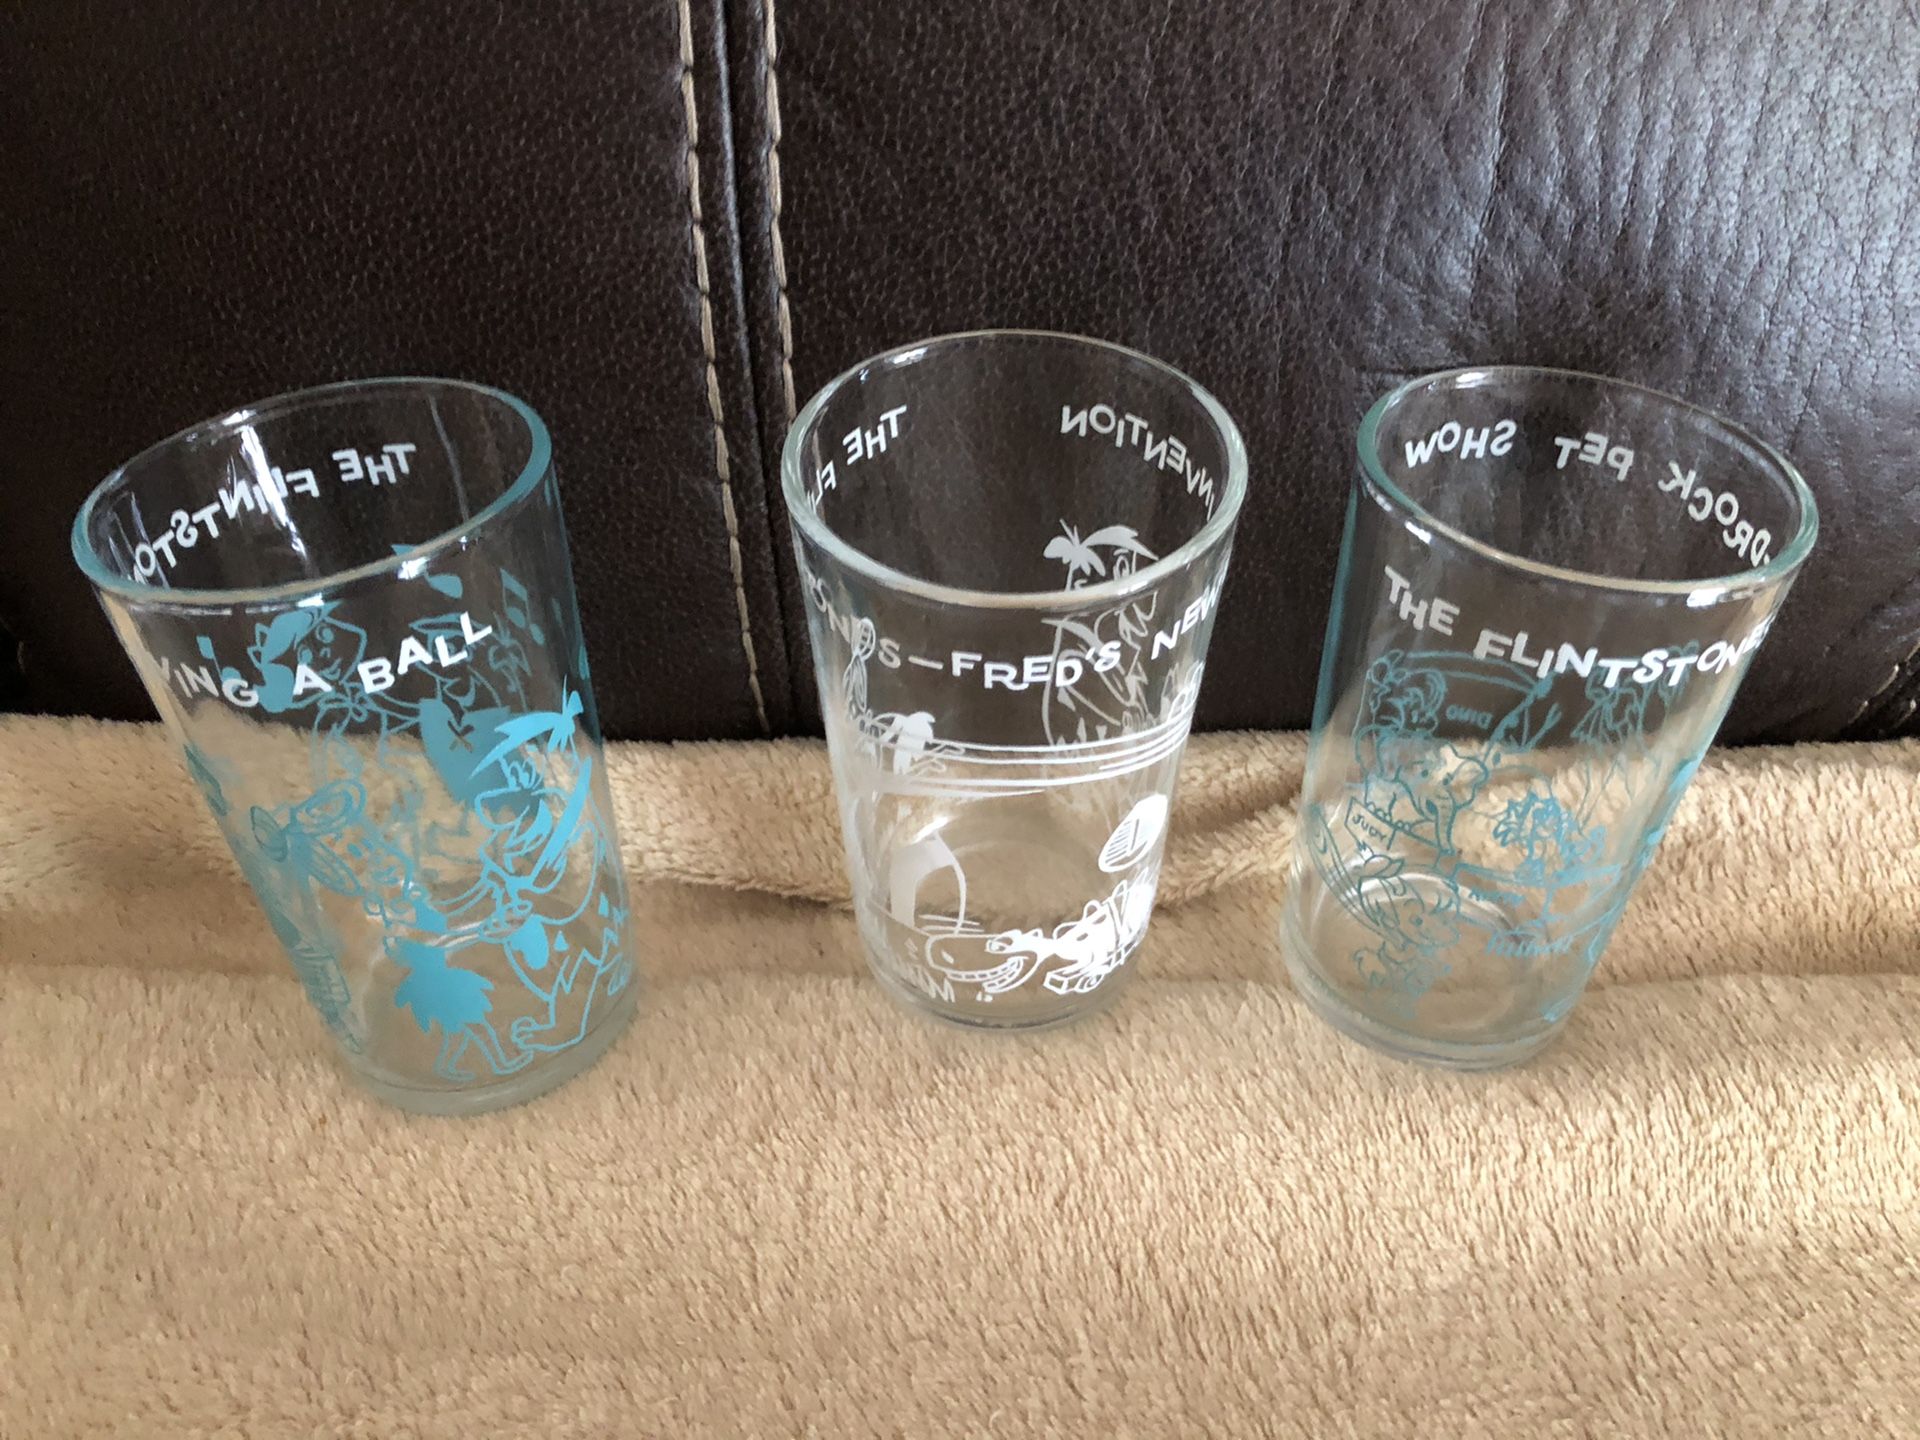 1964 Flinstone glass juice glasses